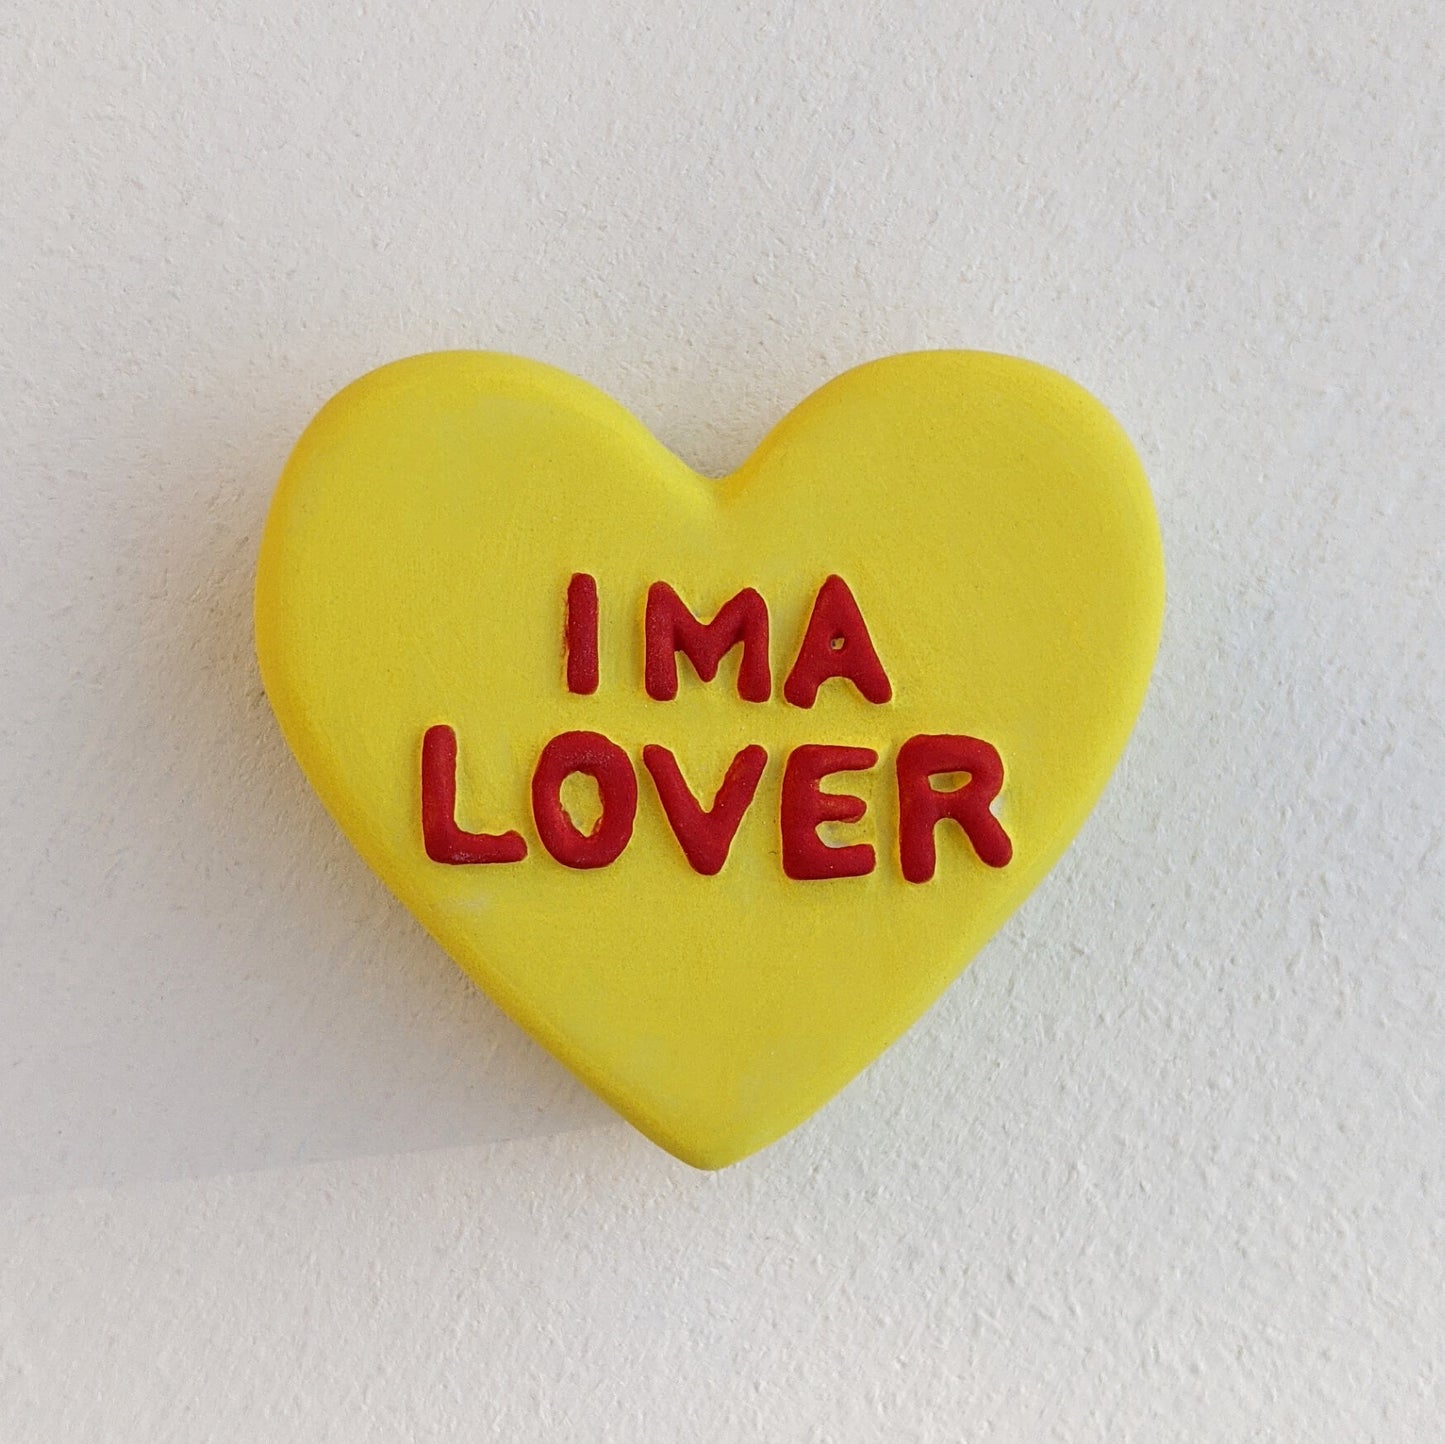 "IMA LOVER" Porcelain Puffy Conversational Heart